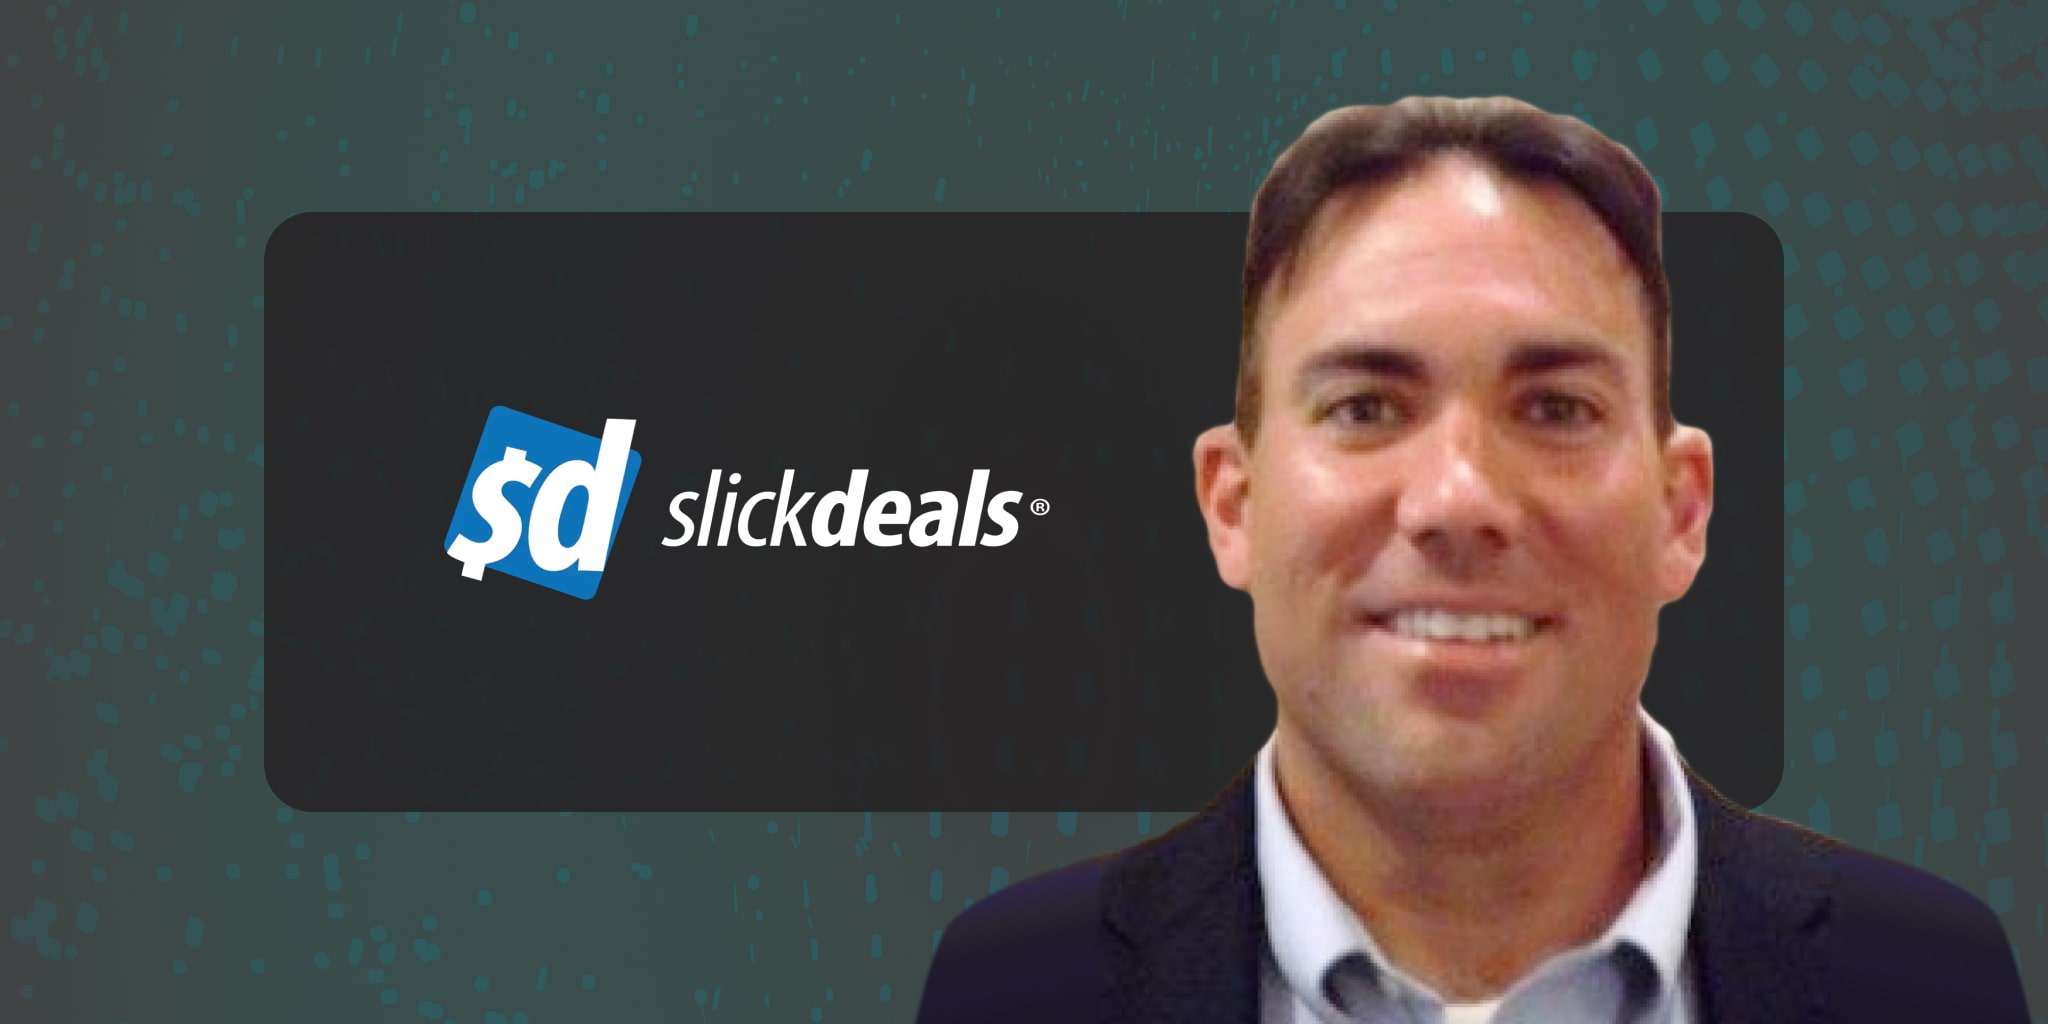 Slickdeals Logo With Greg Mabrito, Director Of Data & Analytics